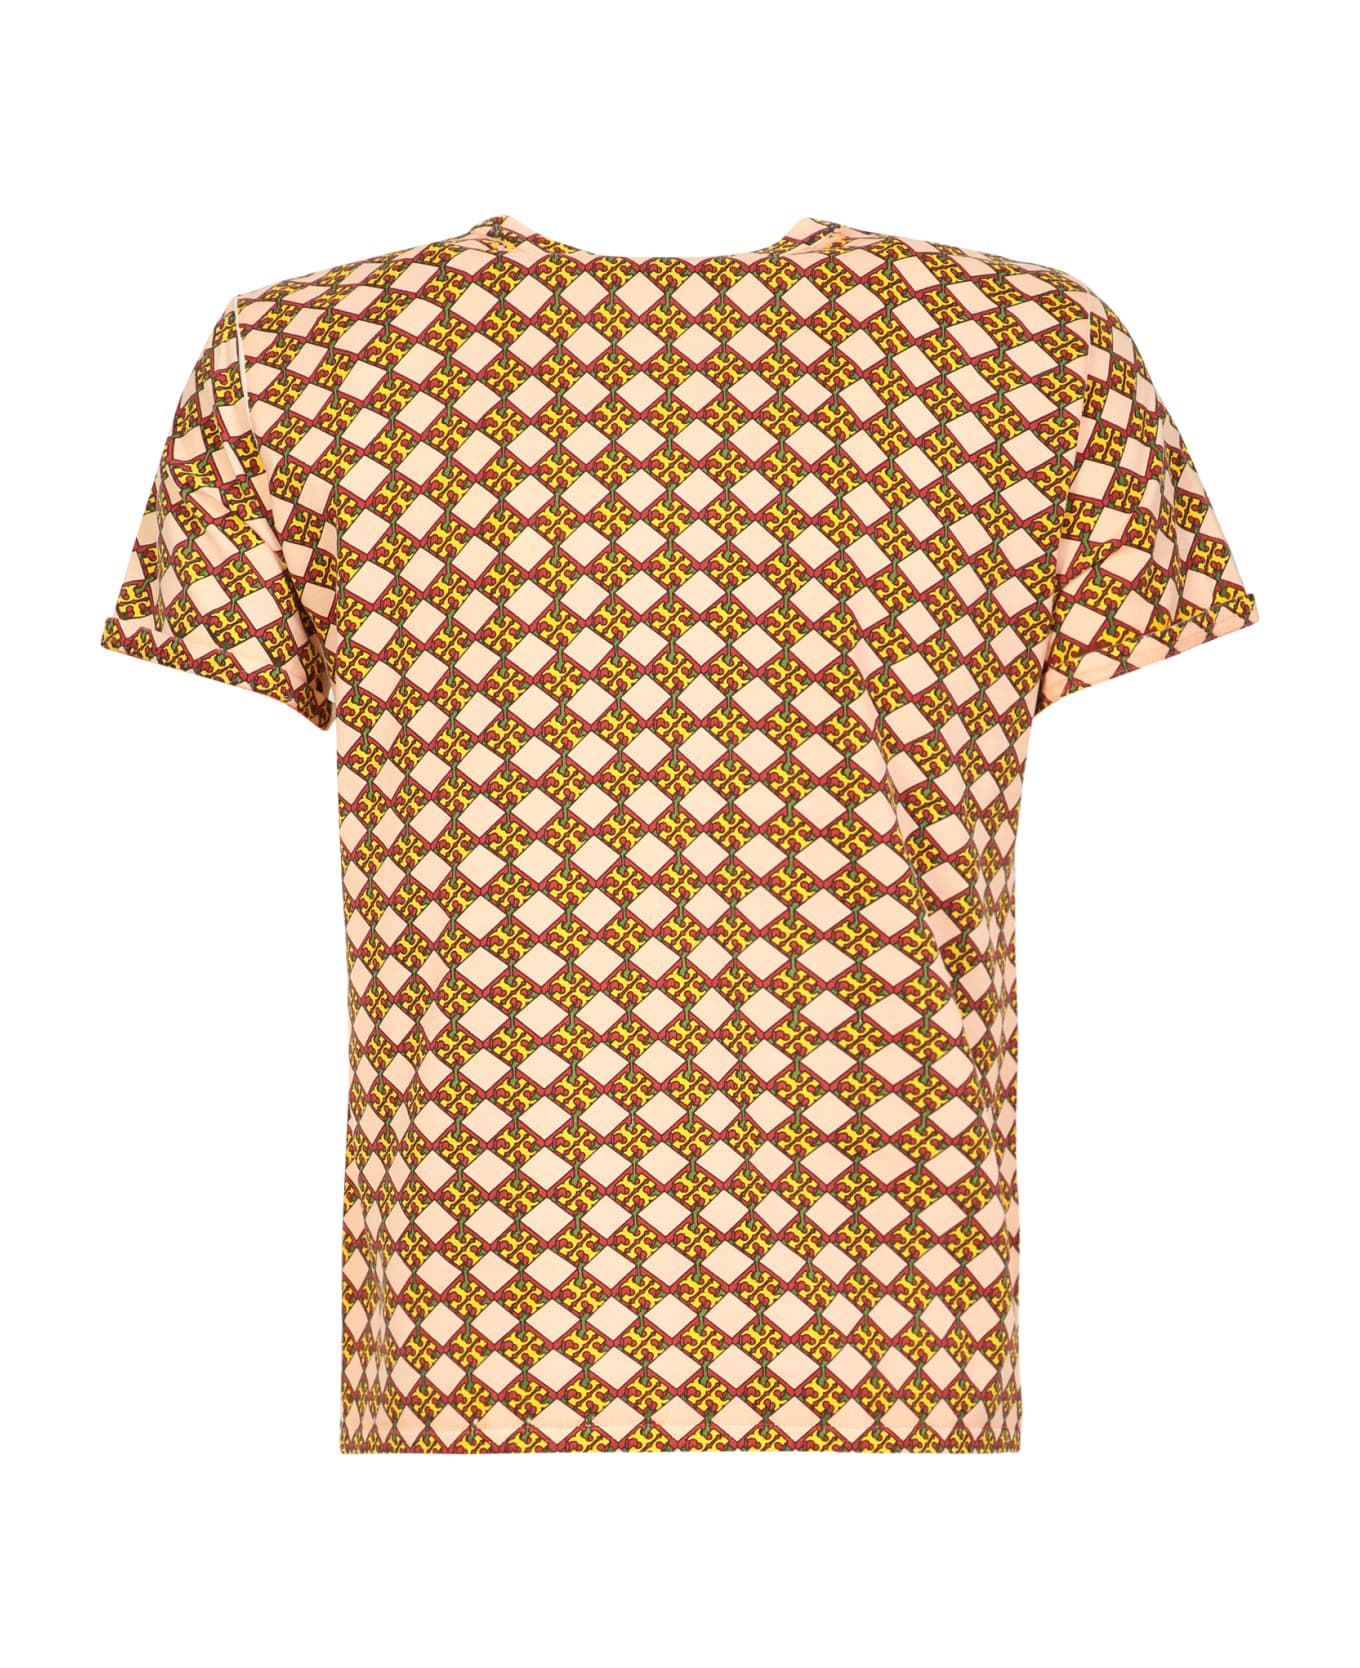 Tory Burch T-shirt - Multi Tシャツ